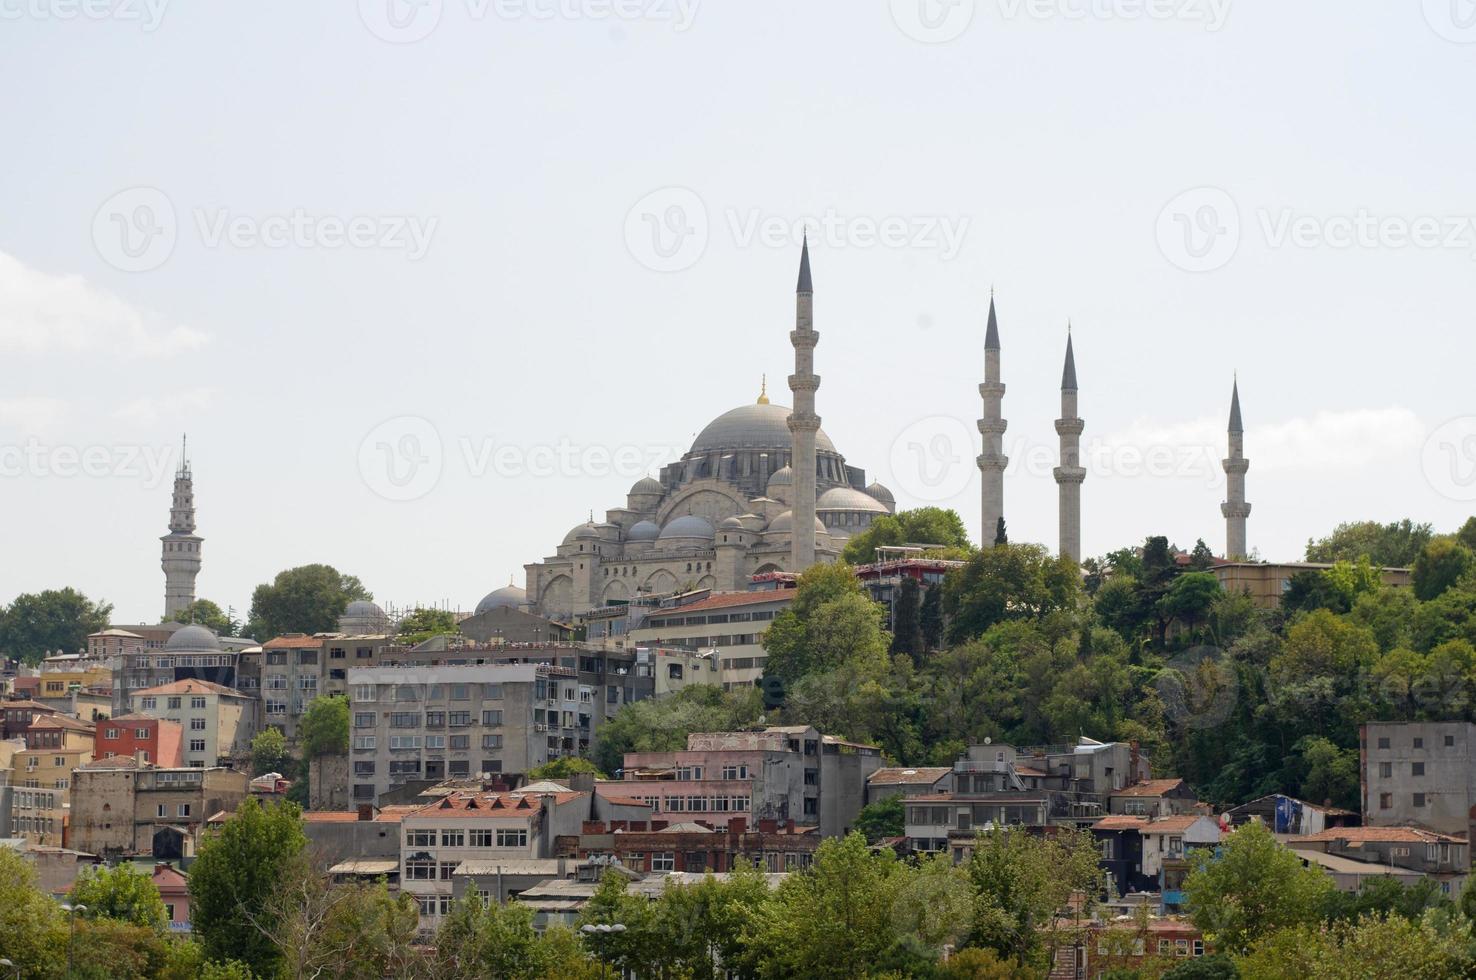 vista da cidade de Istambul suleymaniye camii (mesquita suleymaniye), turquia foto